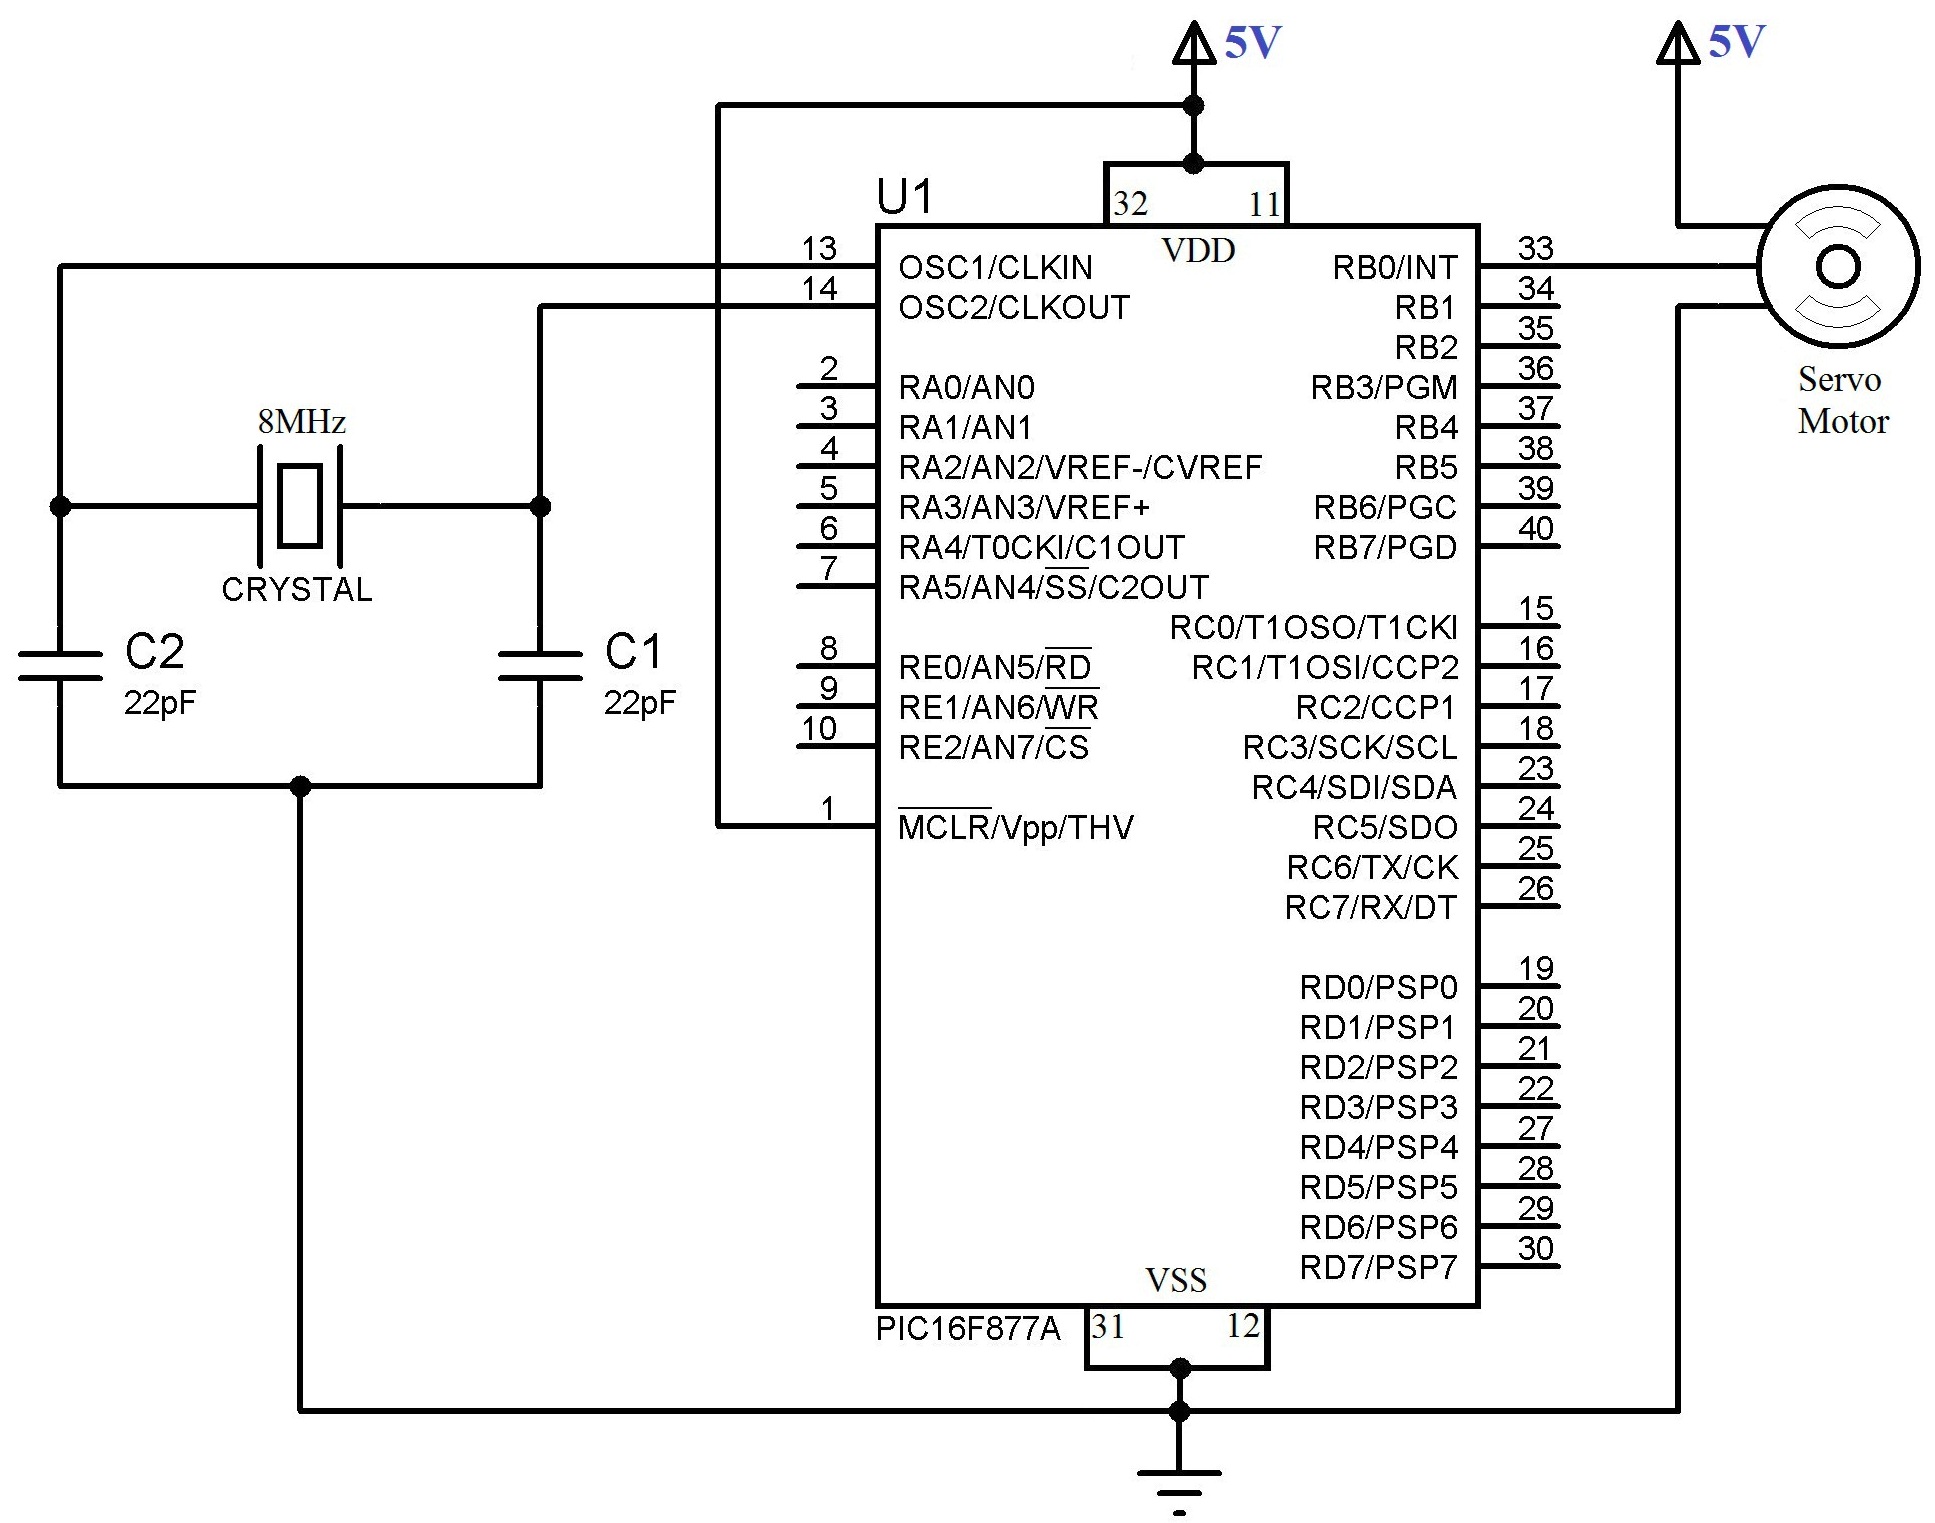 Interfacing Servo Motor with PIC Microcontroller - MikroC